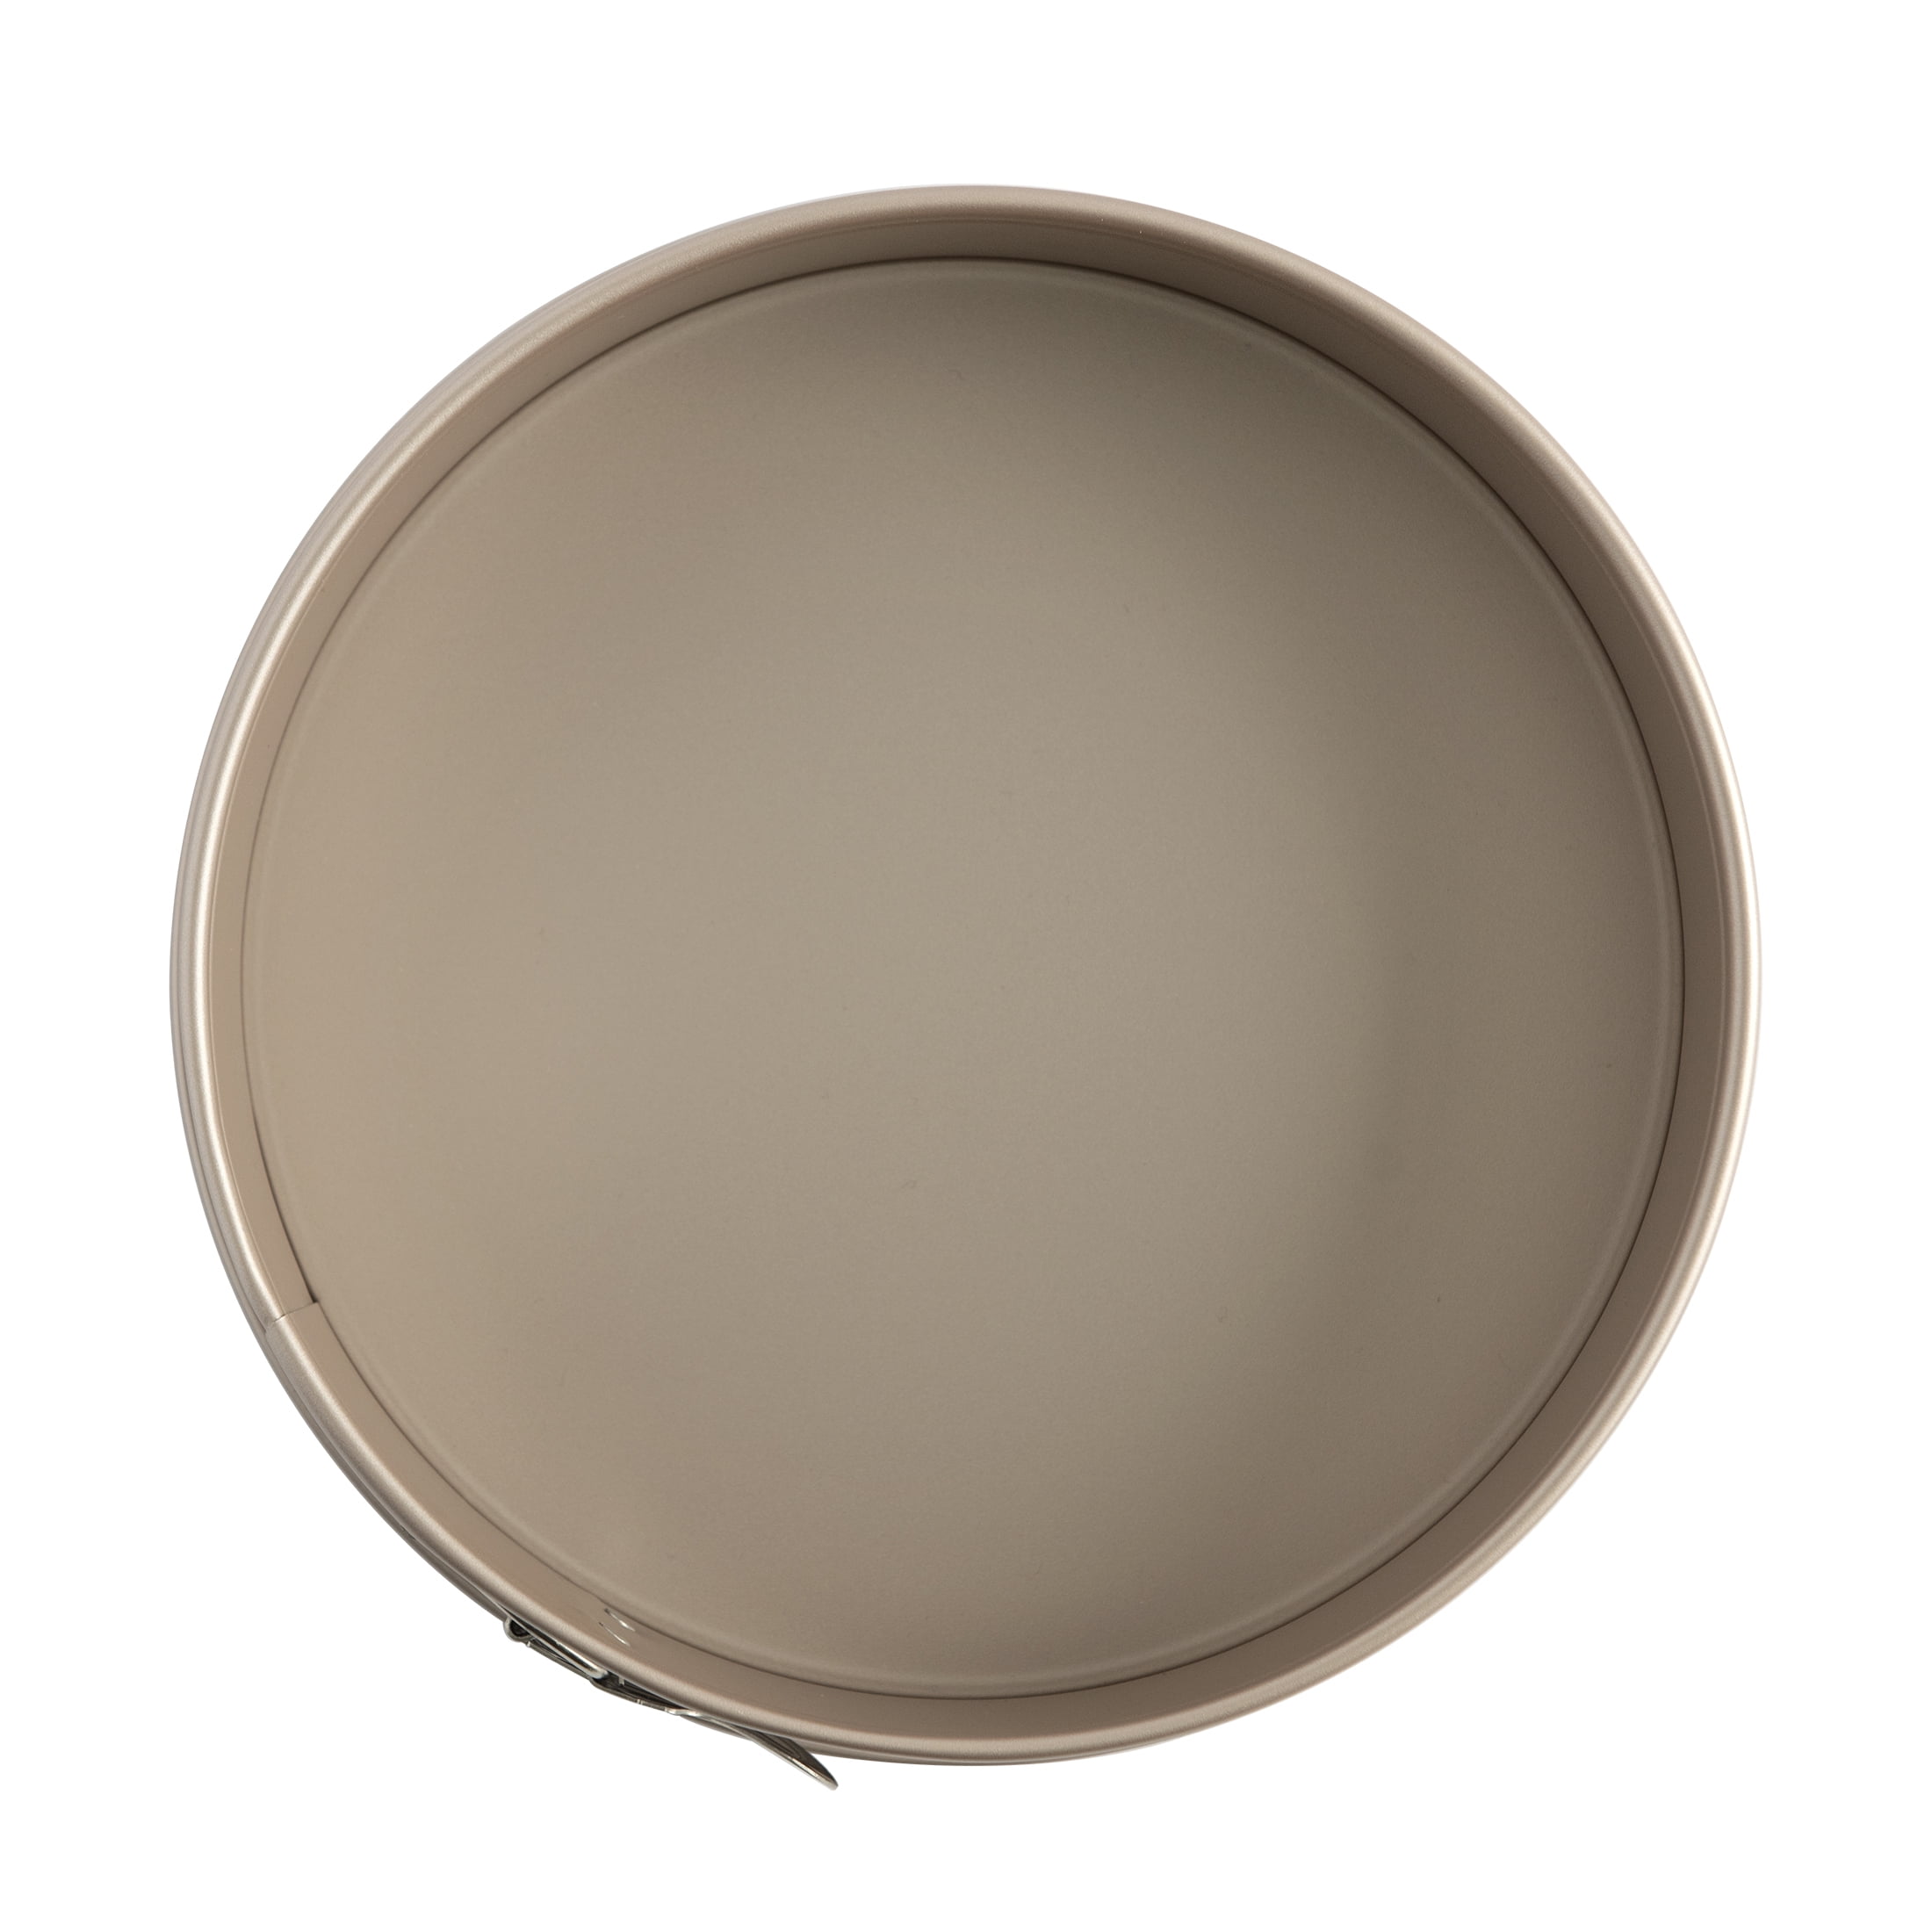  Nordic Ware Bundt Fancy Springform Pan, 9 Inch, Non